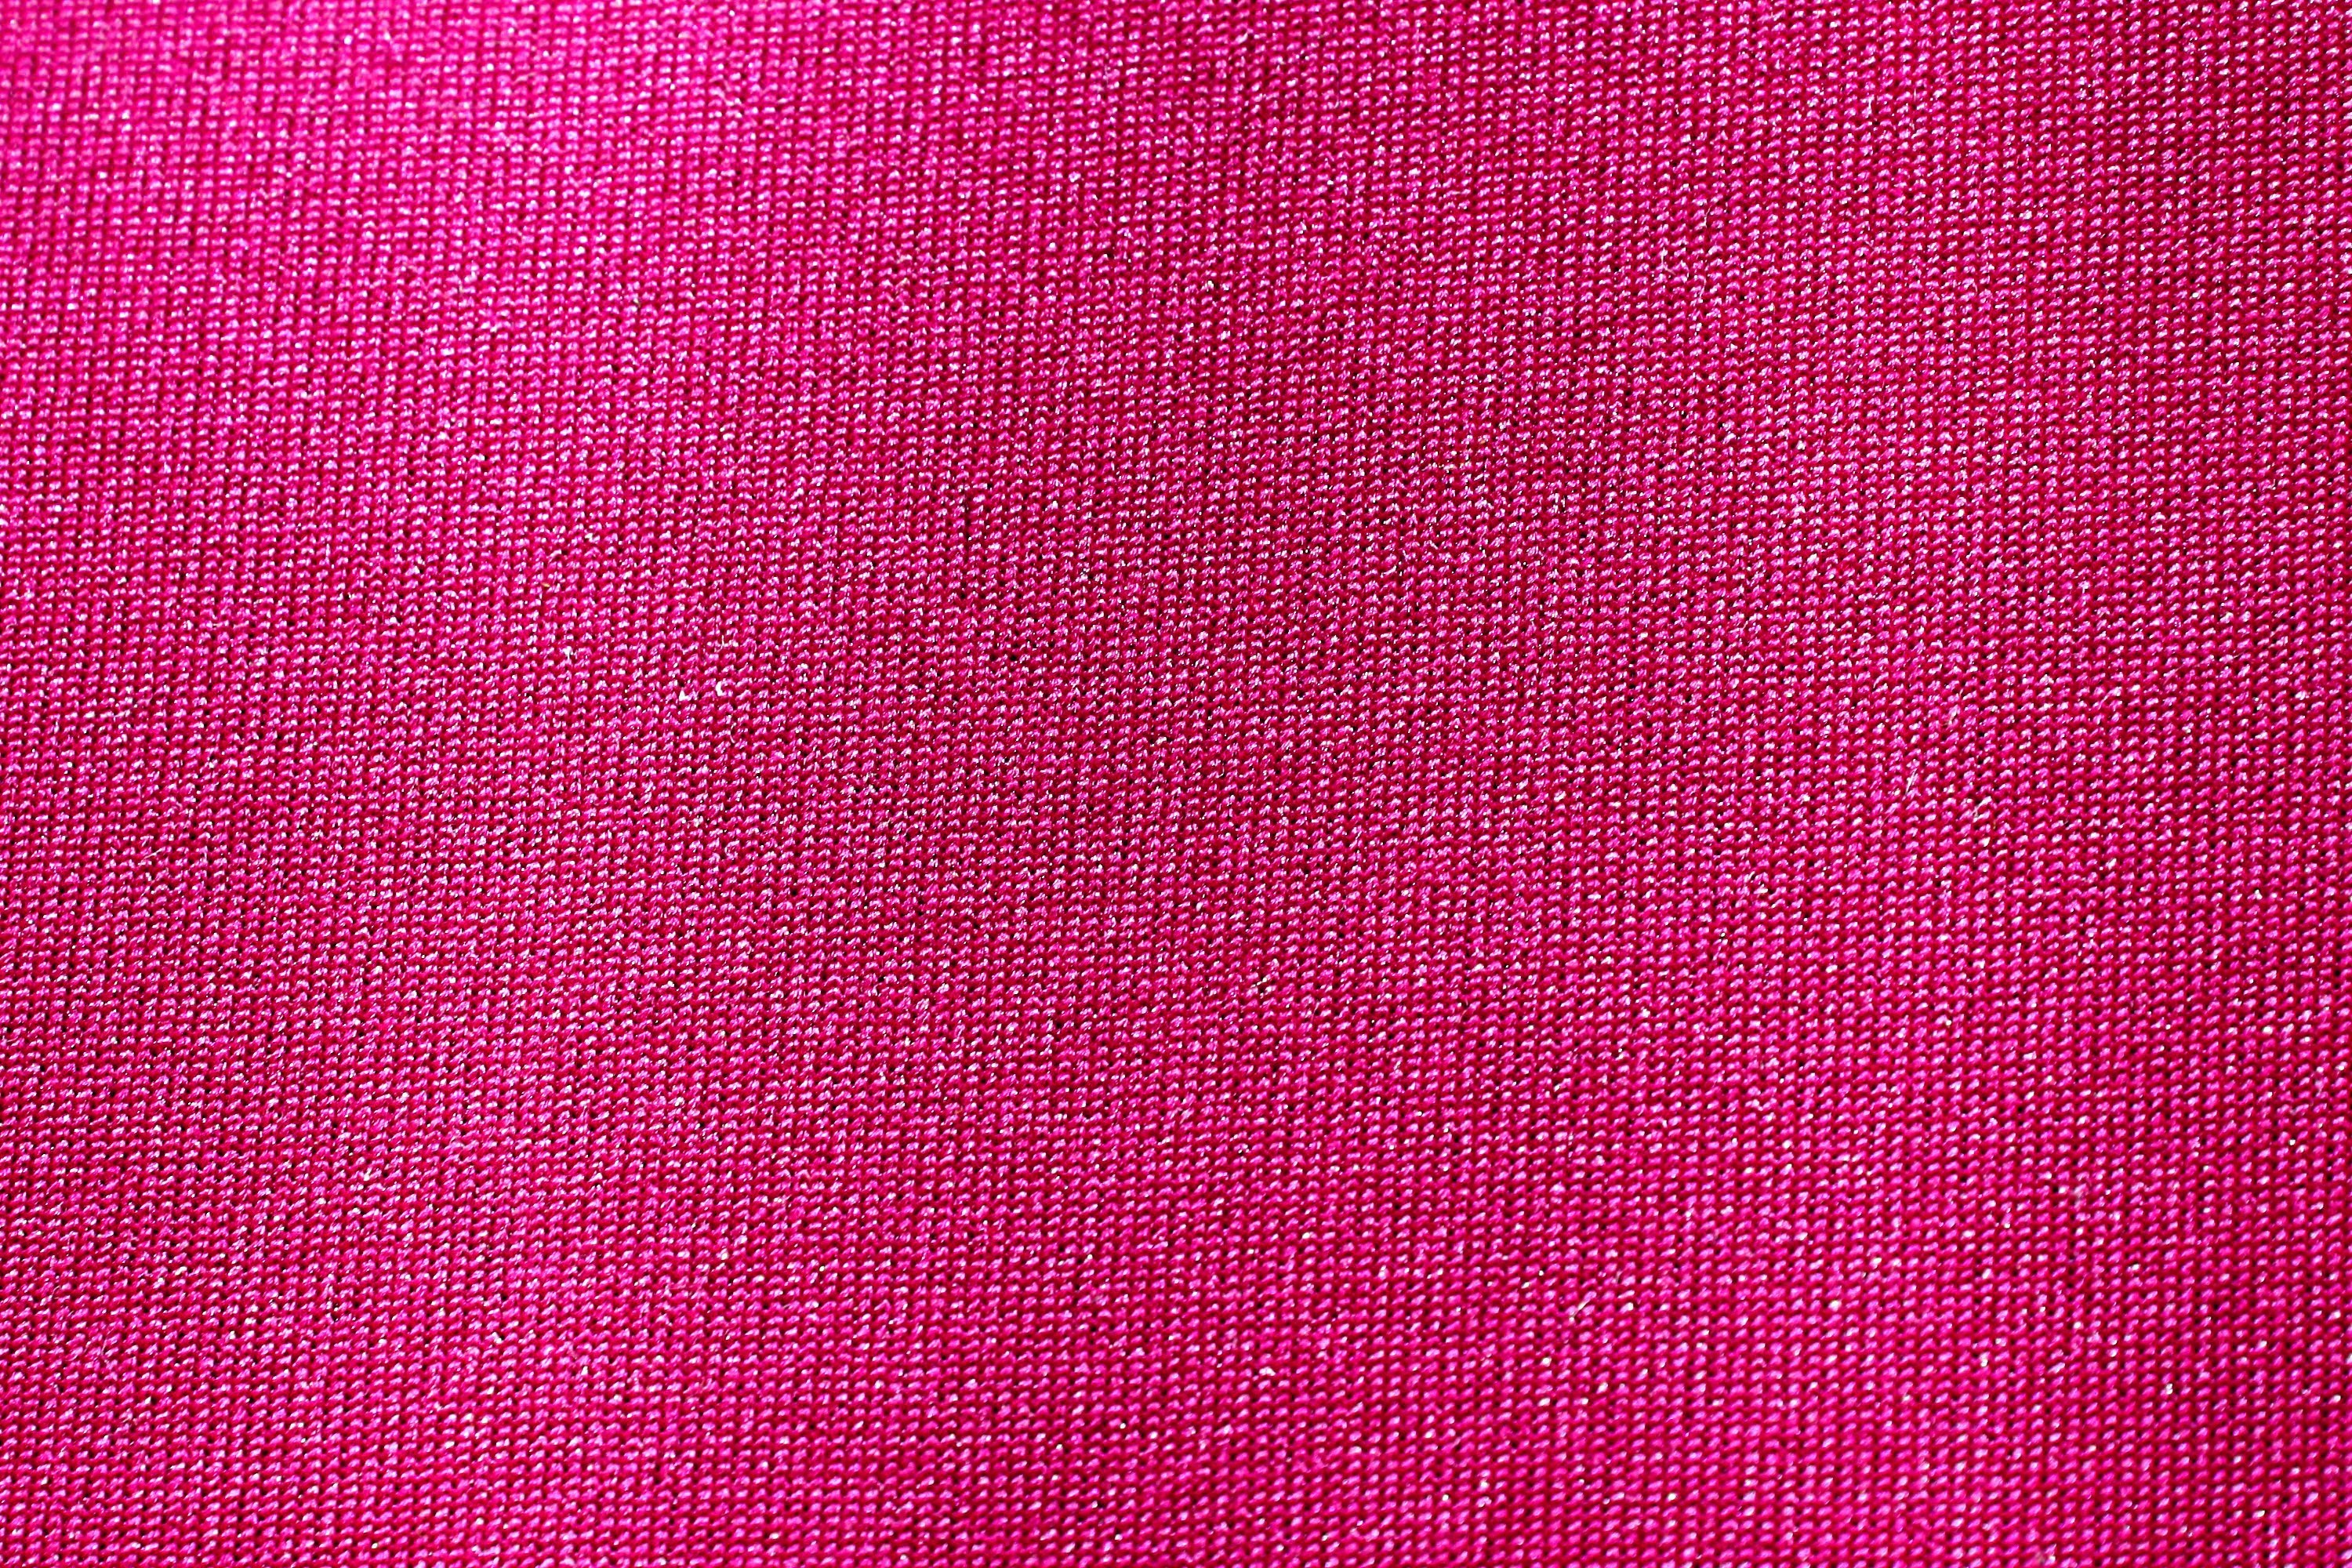 3000x2000 bright pink wallpaper